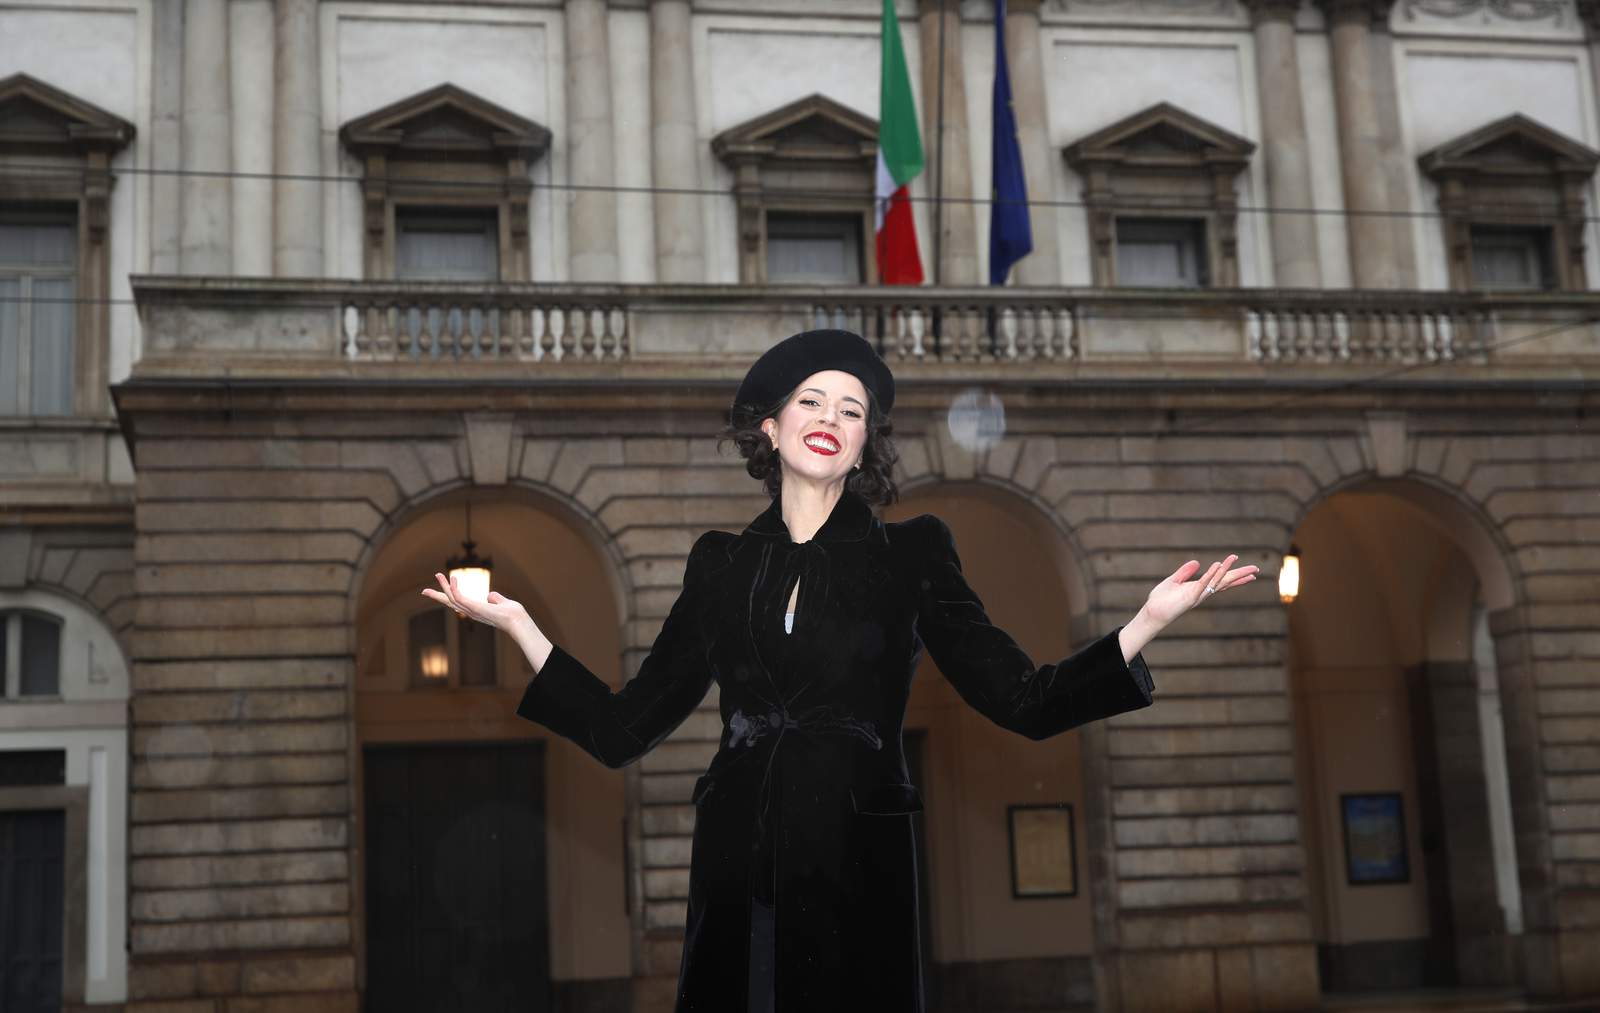 US star soprano misses La Scala gala season-open debut